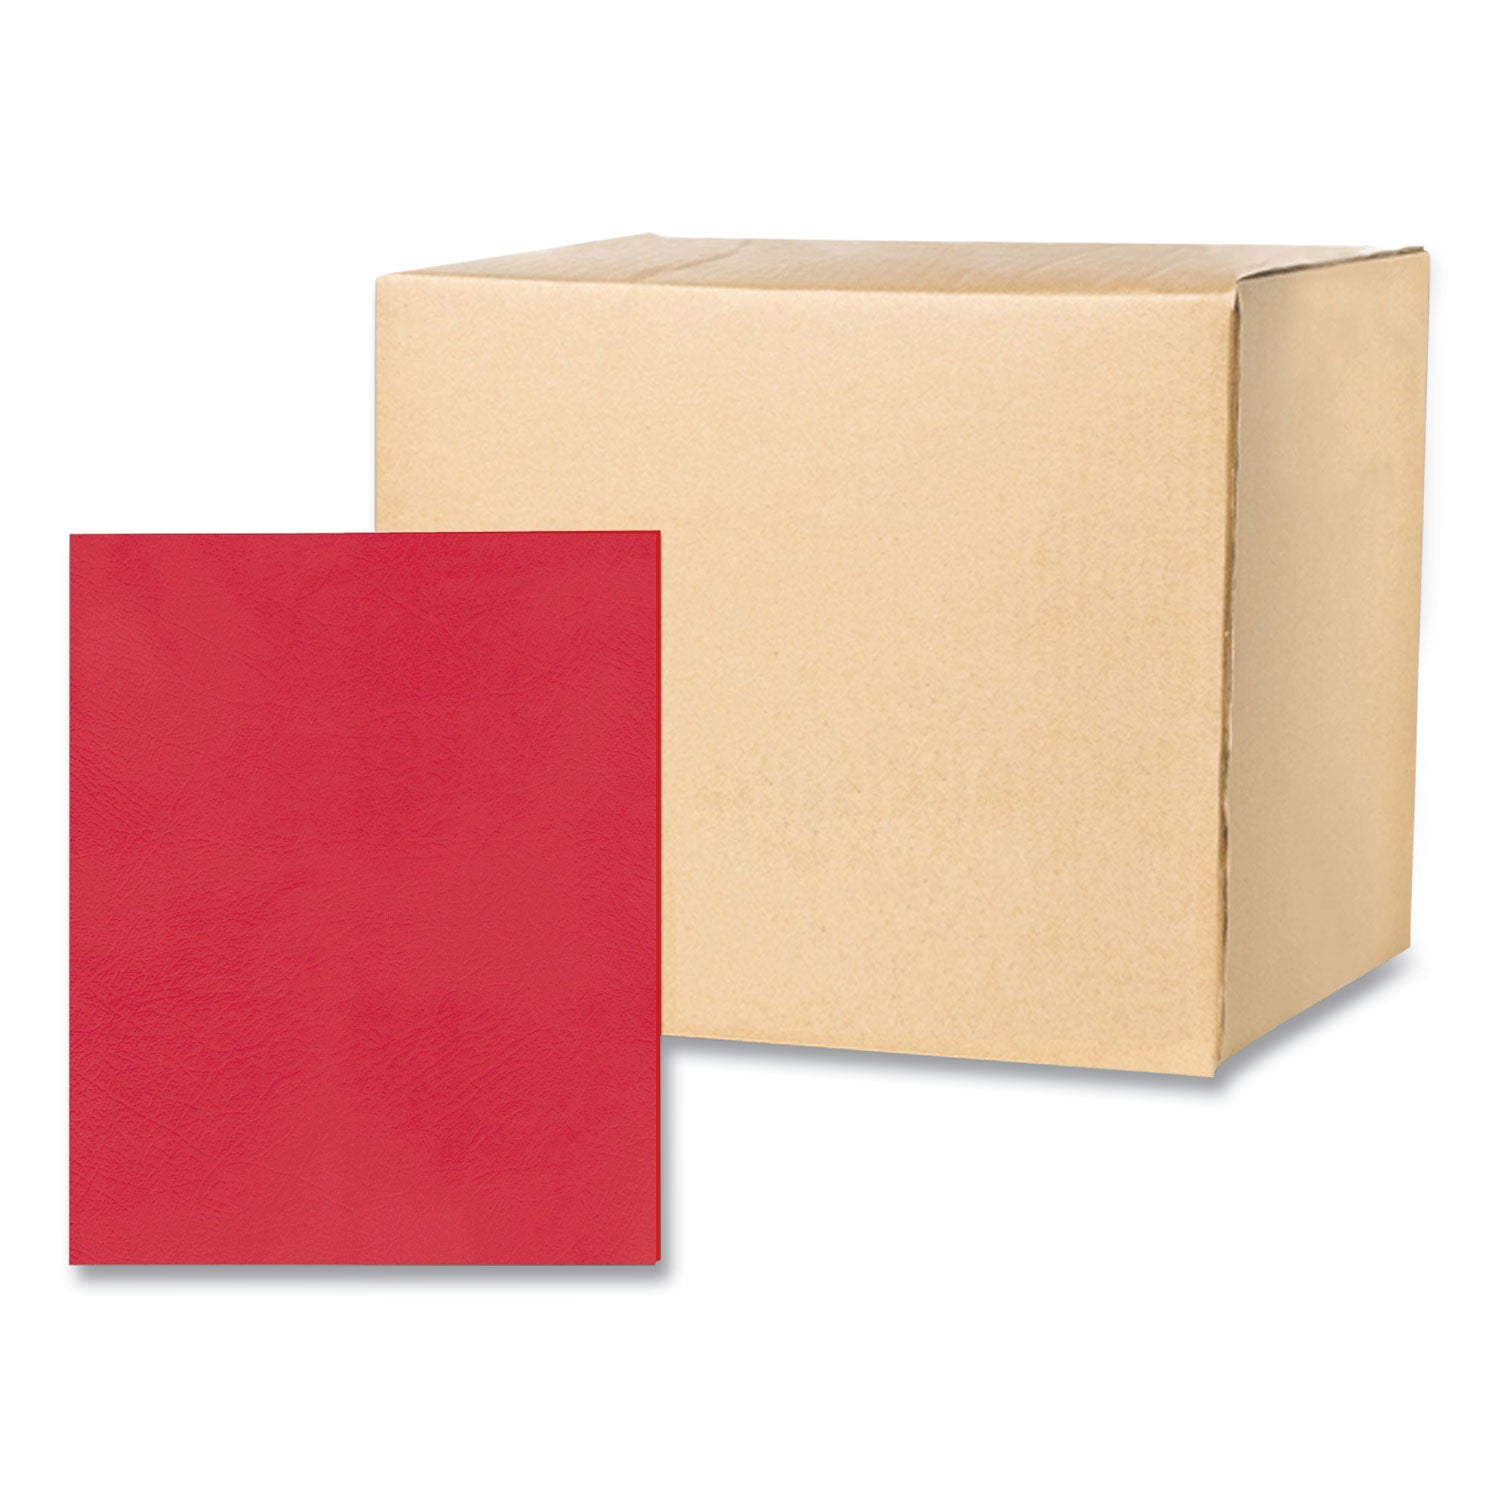 pocket-folder-05-capacity-11-x-85-red-25-box-10-boxes-carton-ships-in-4-6-business-days_roa50123cs - 1